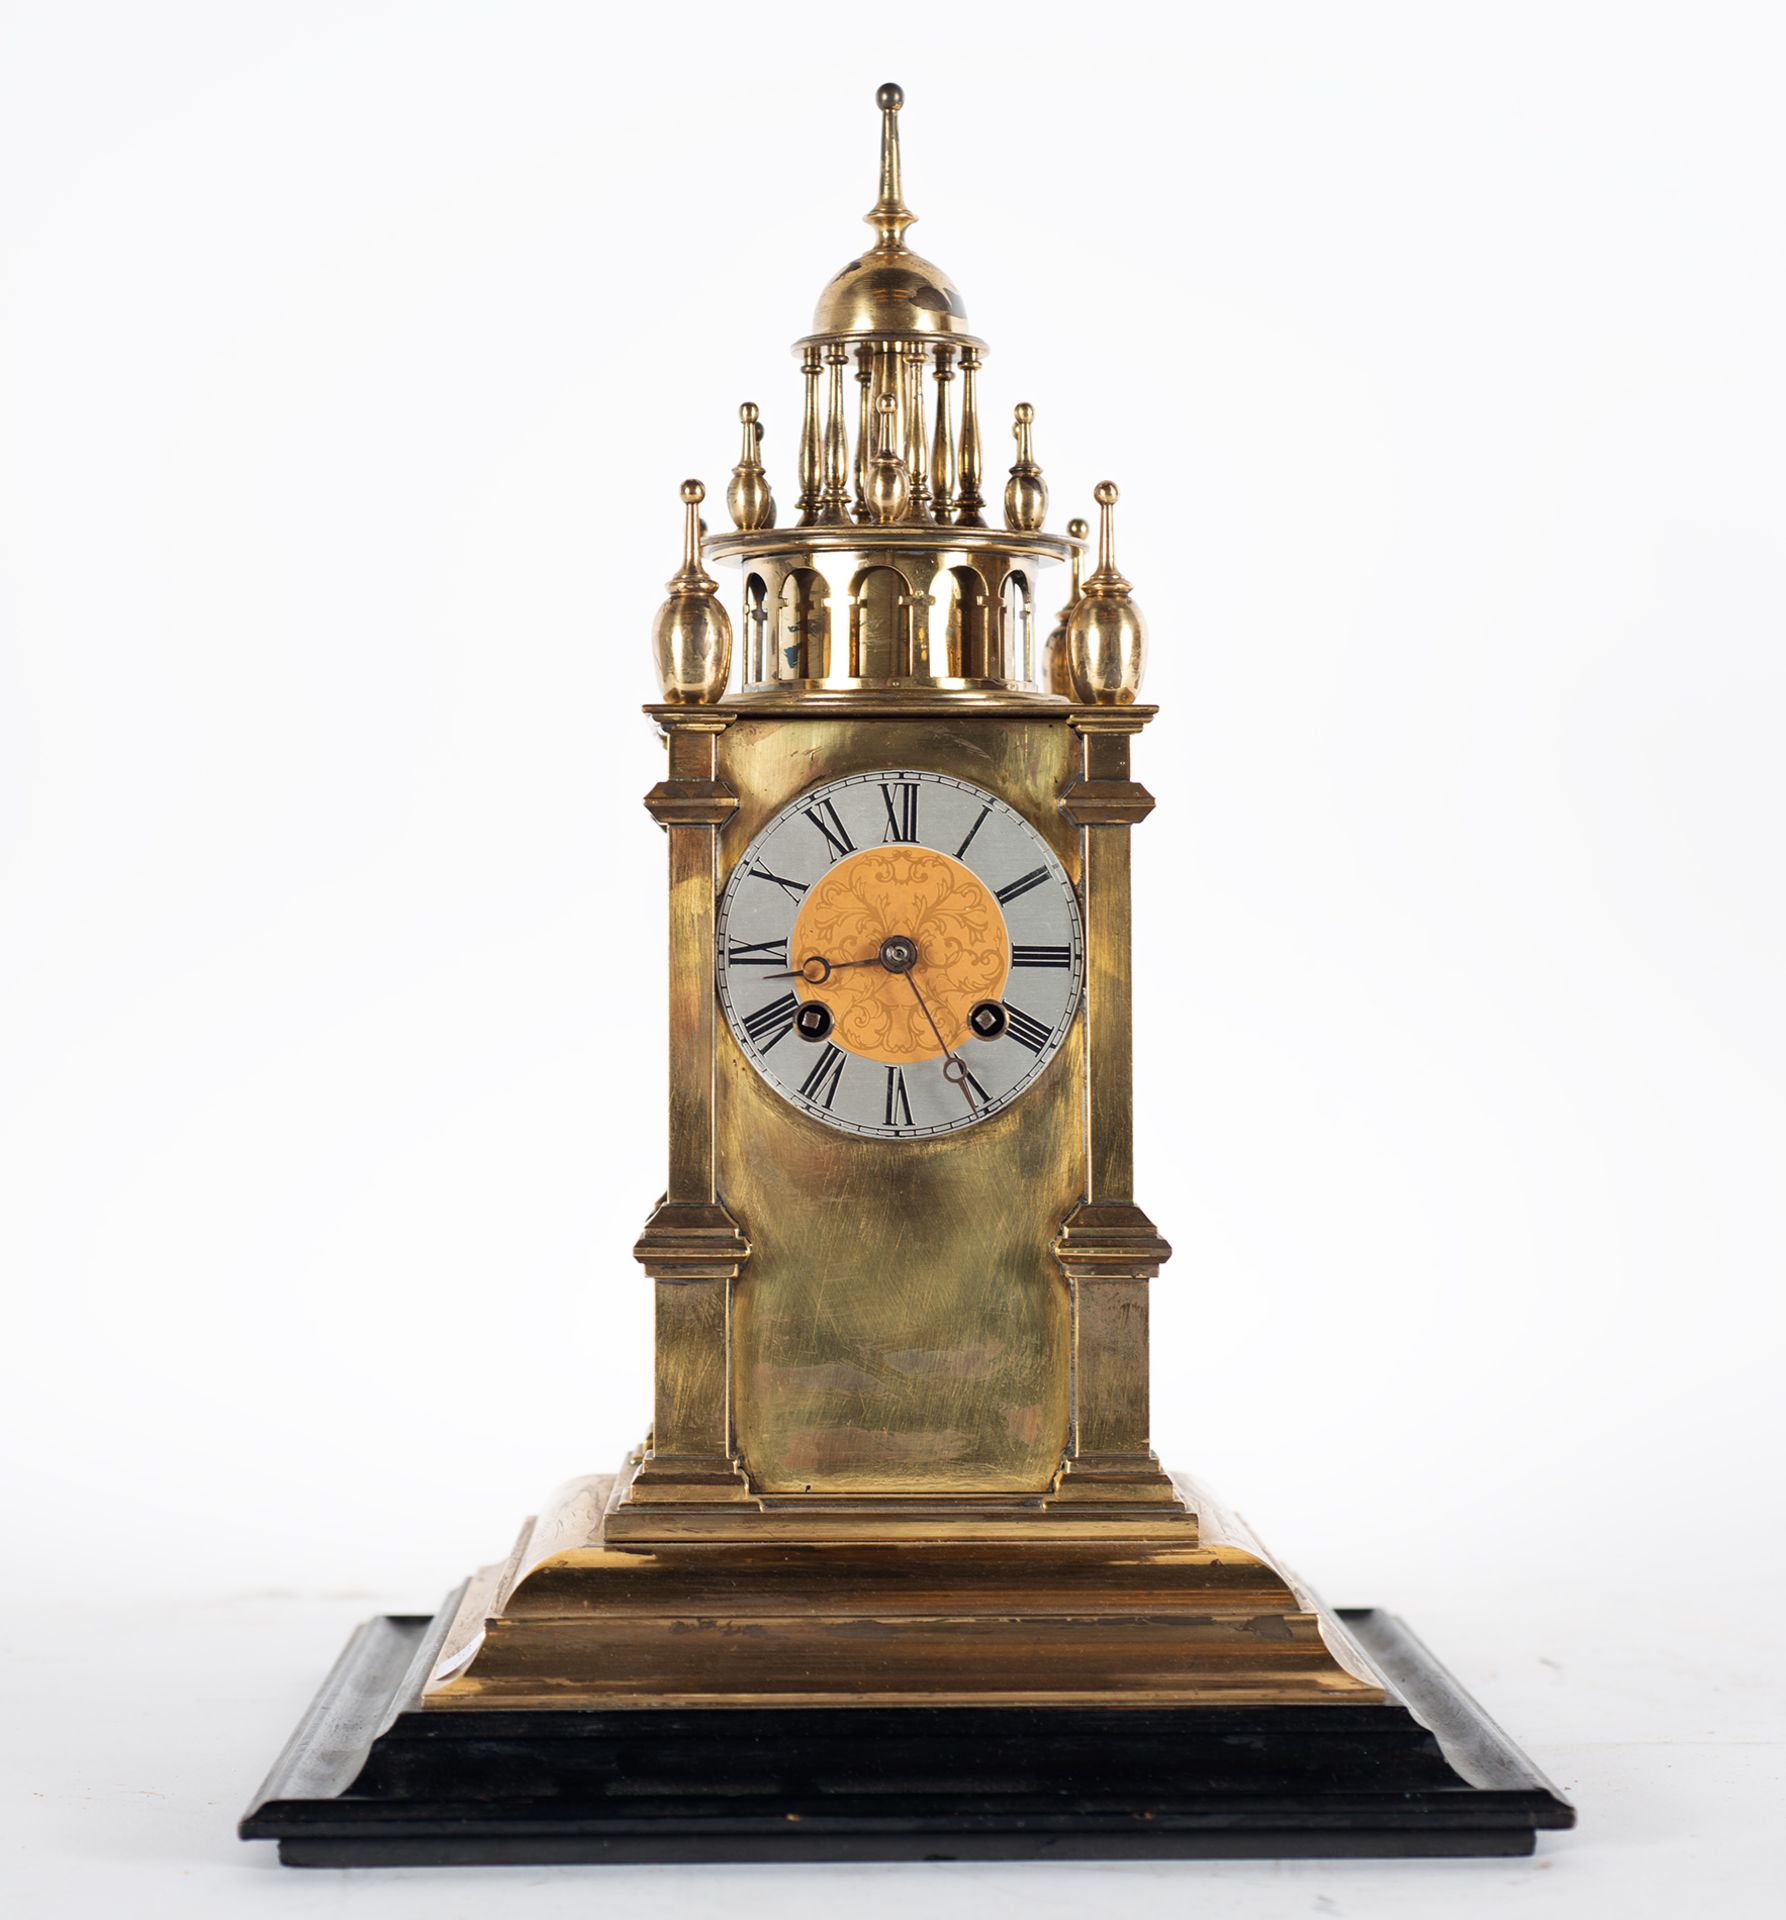 Nuremberg-type cathedral clock, 19th century